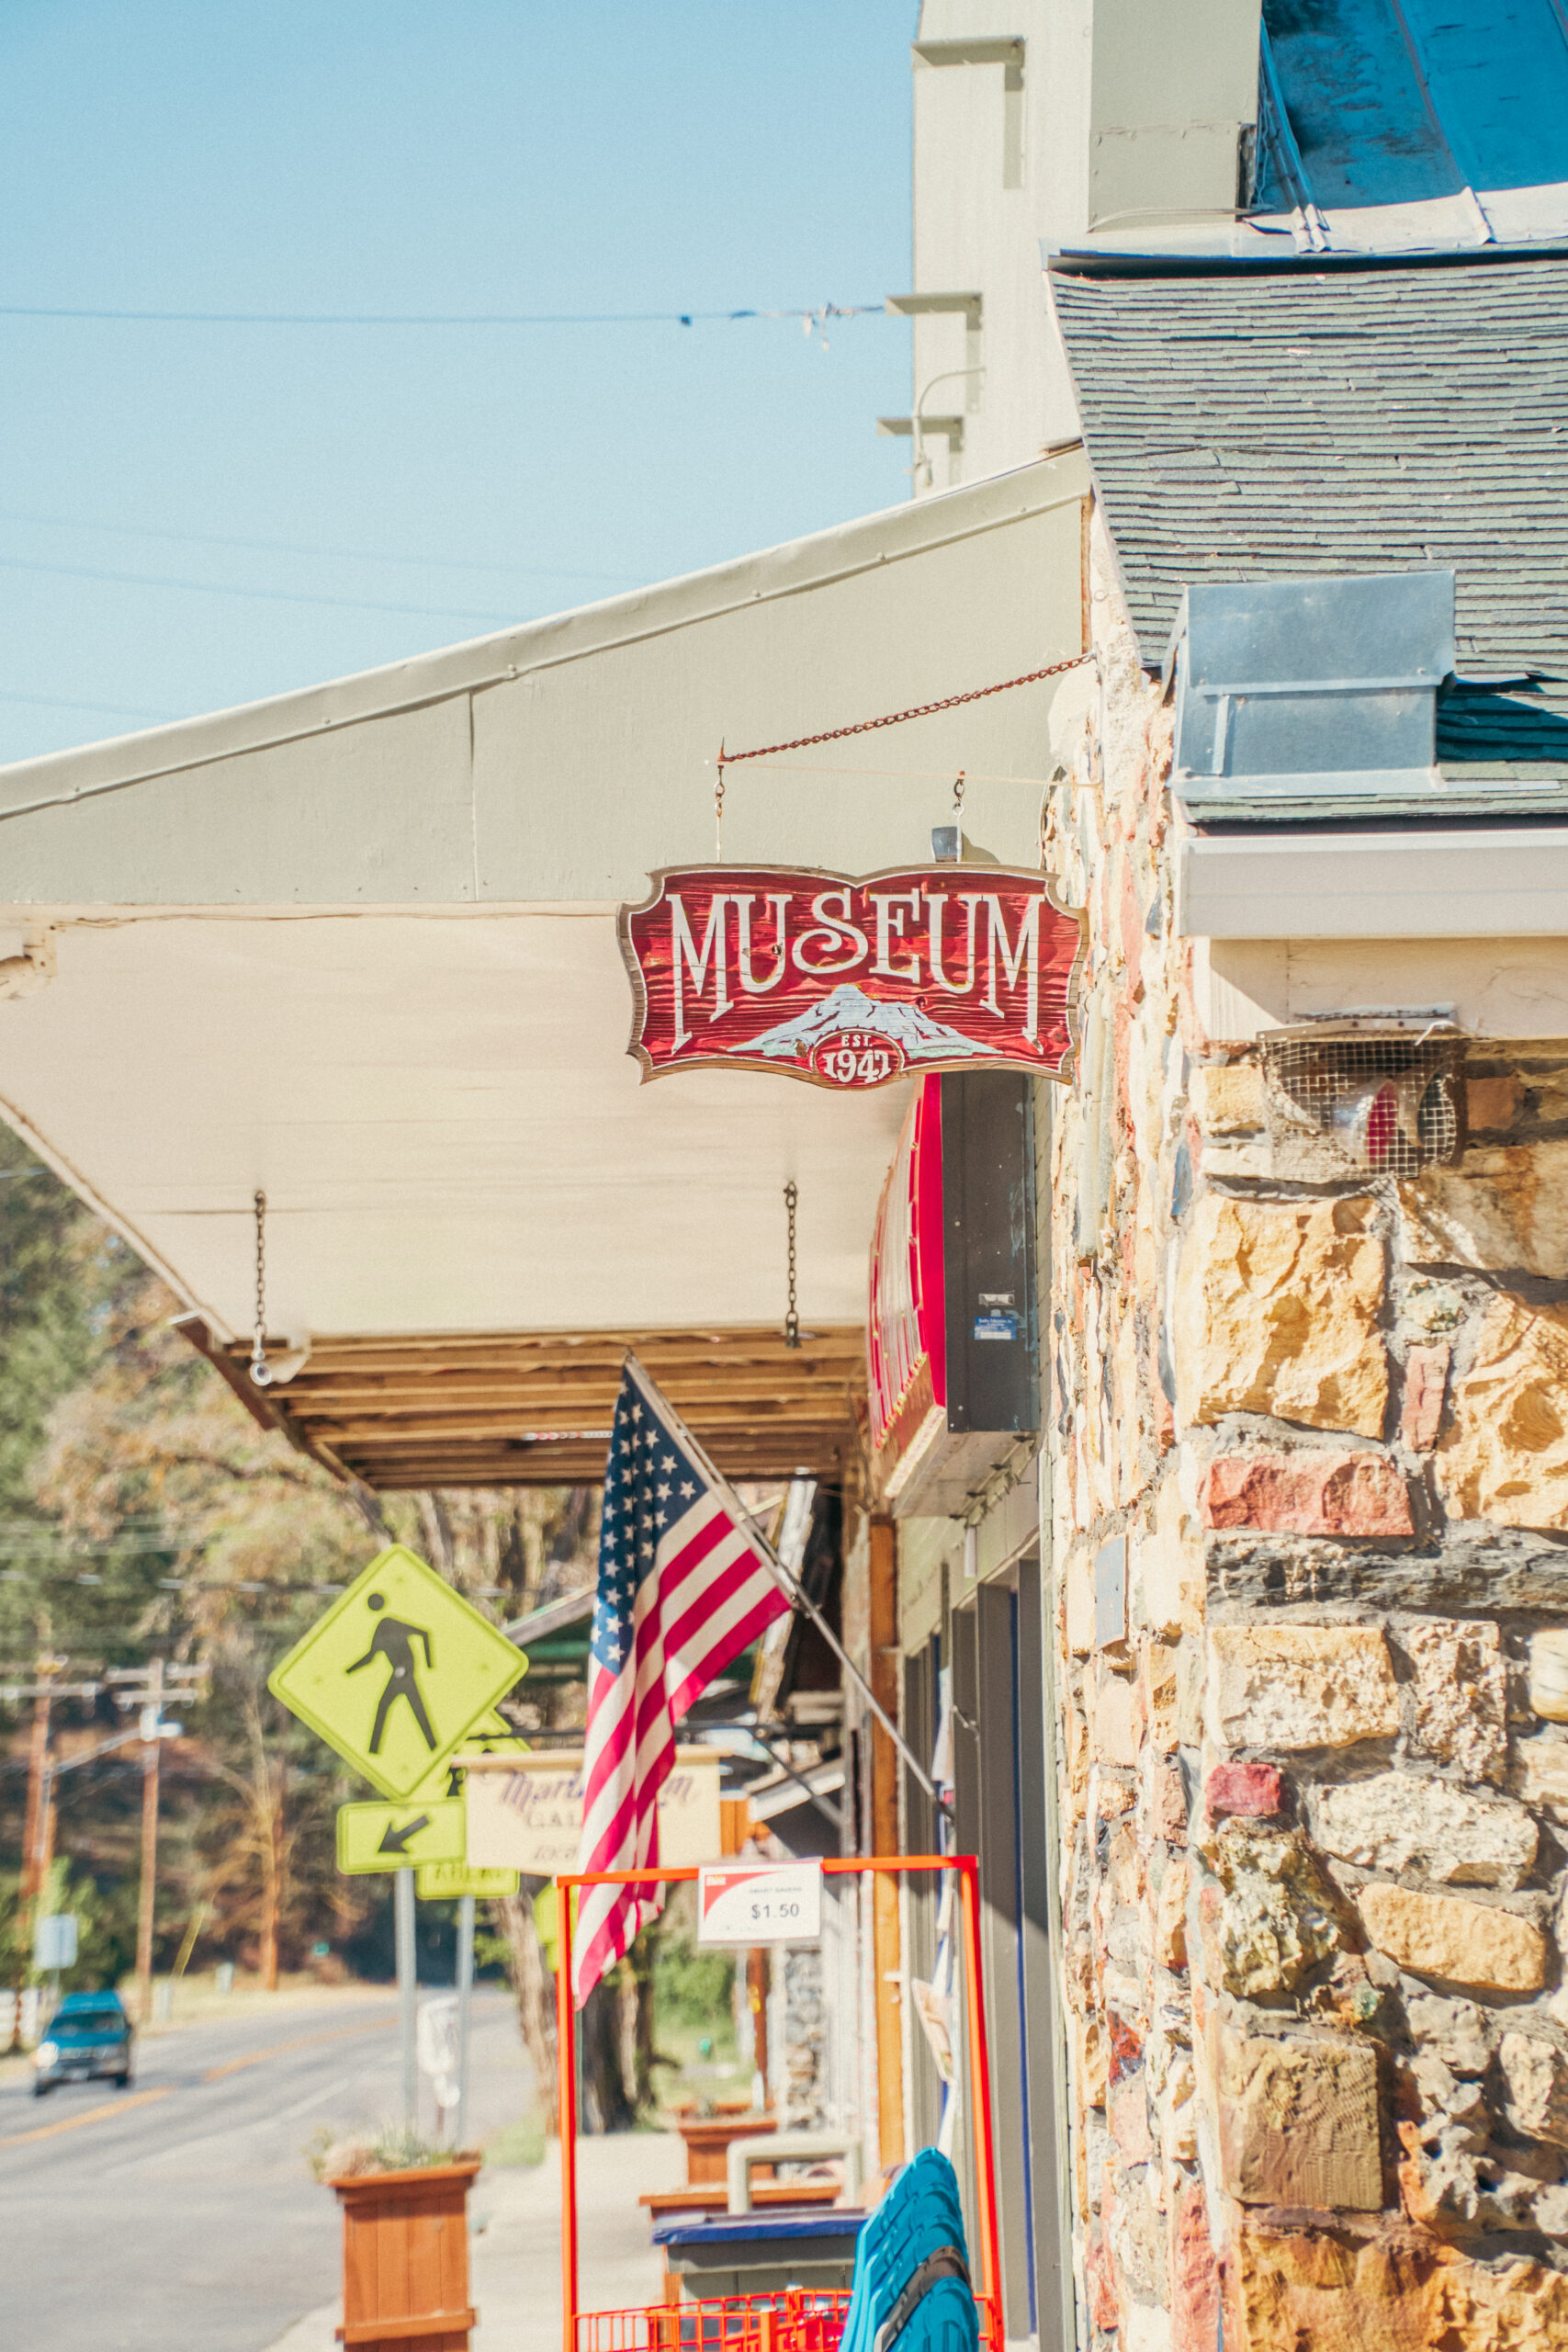 Fort Jones Museum, the "biggest little museum," incorporates historic millstones in its exterior.